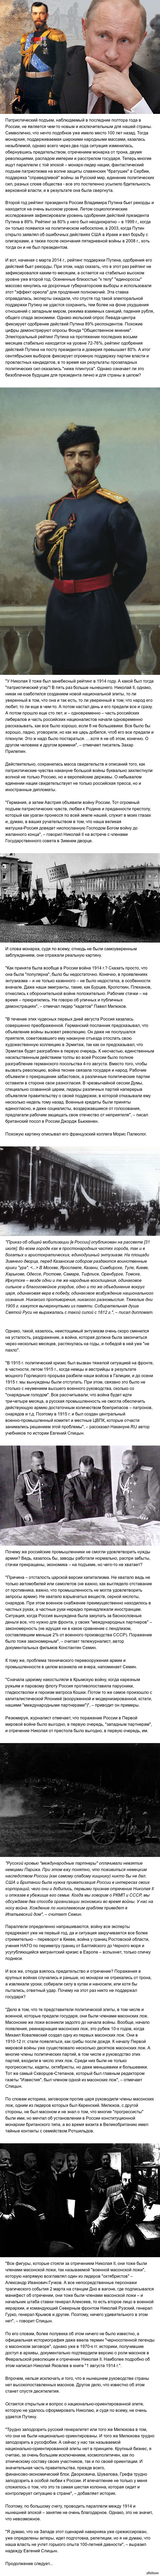 Phantom of February - 100 years later? - Russia, Российская империя, Politics, Longpost